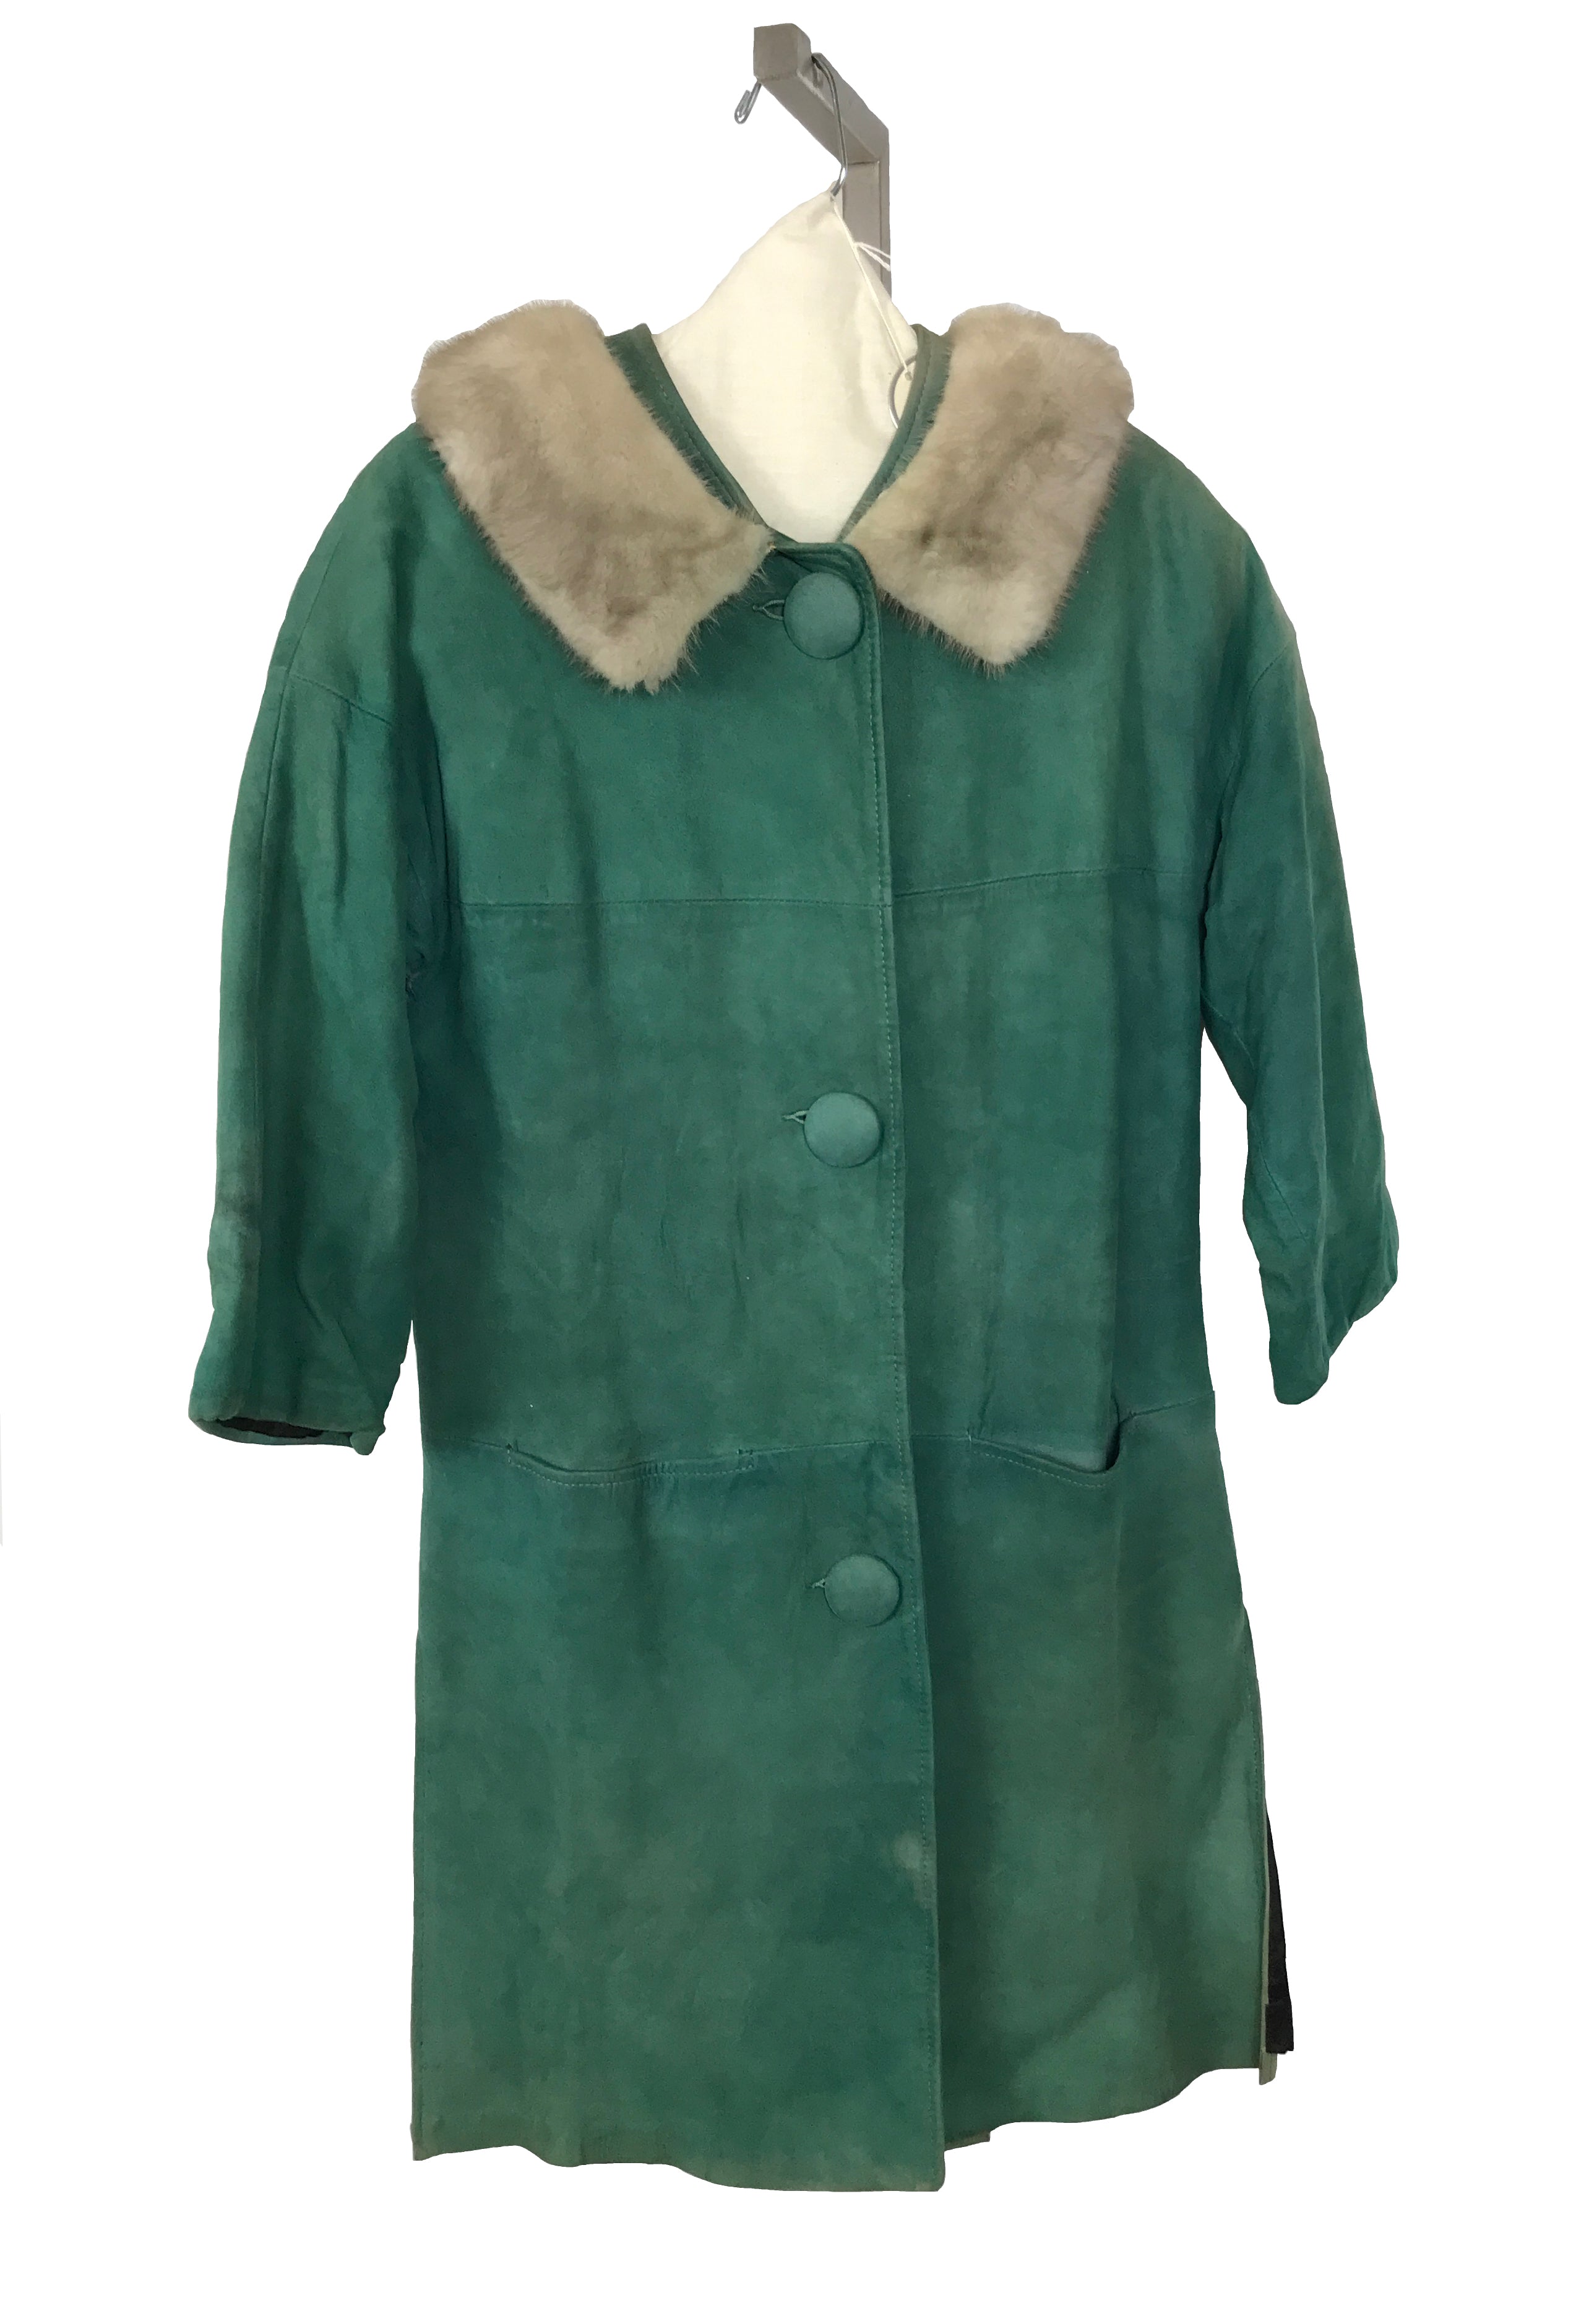 Vintage Green Suede Coat with Fur Collar